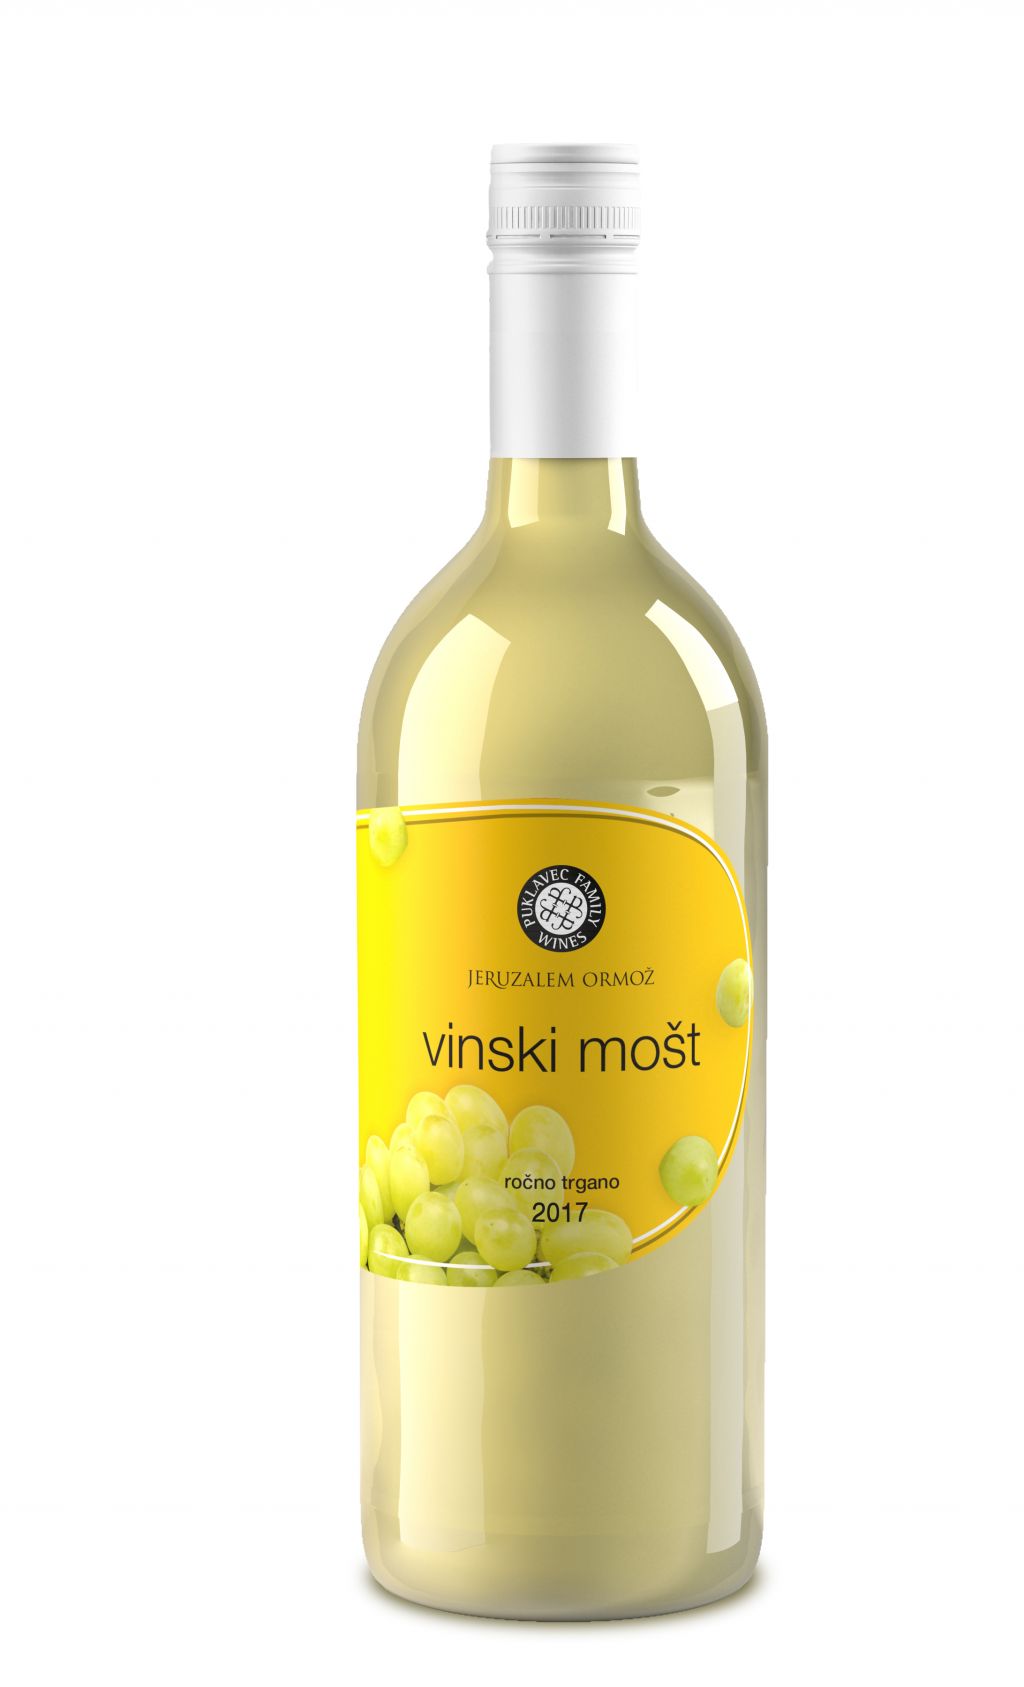 Puklavec Family Wines: vinski mošt, 2017